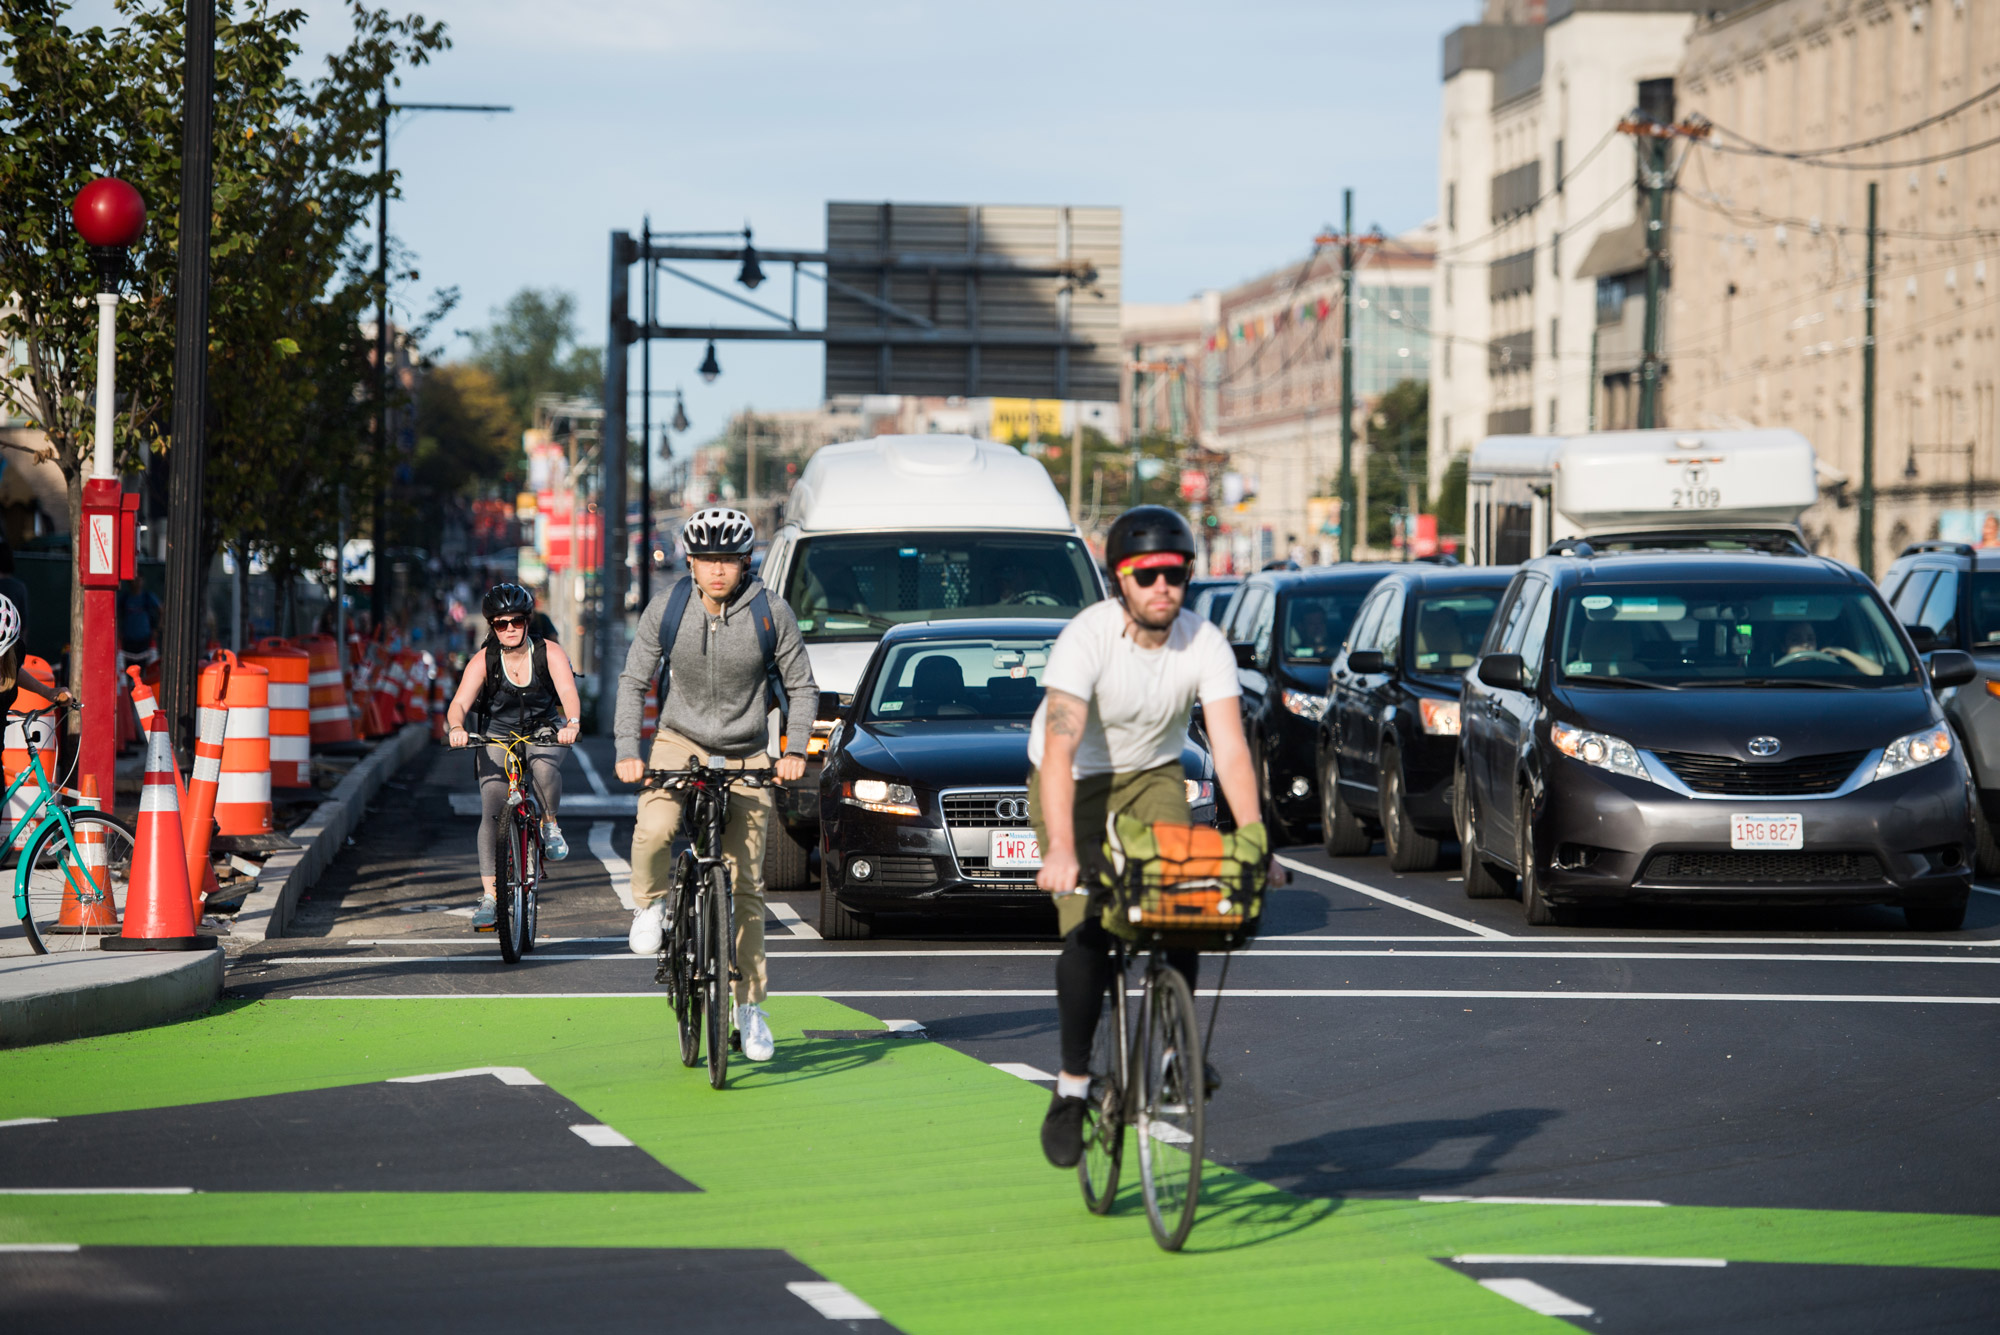 Bike lane. Broadway Bike Lane.. Urban Health общественный транспорт и велосипеды. Bidirectional Bike Lanes. Cyclists and Drivers they are.